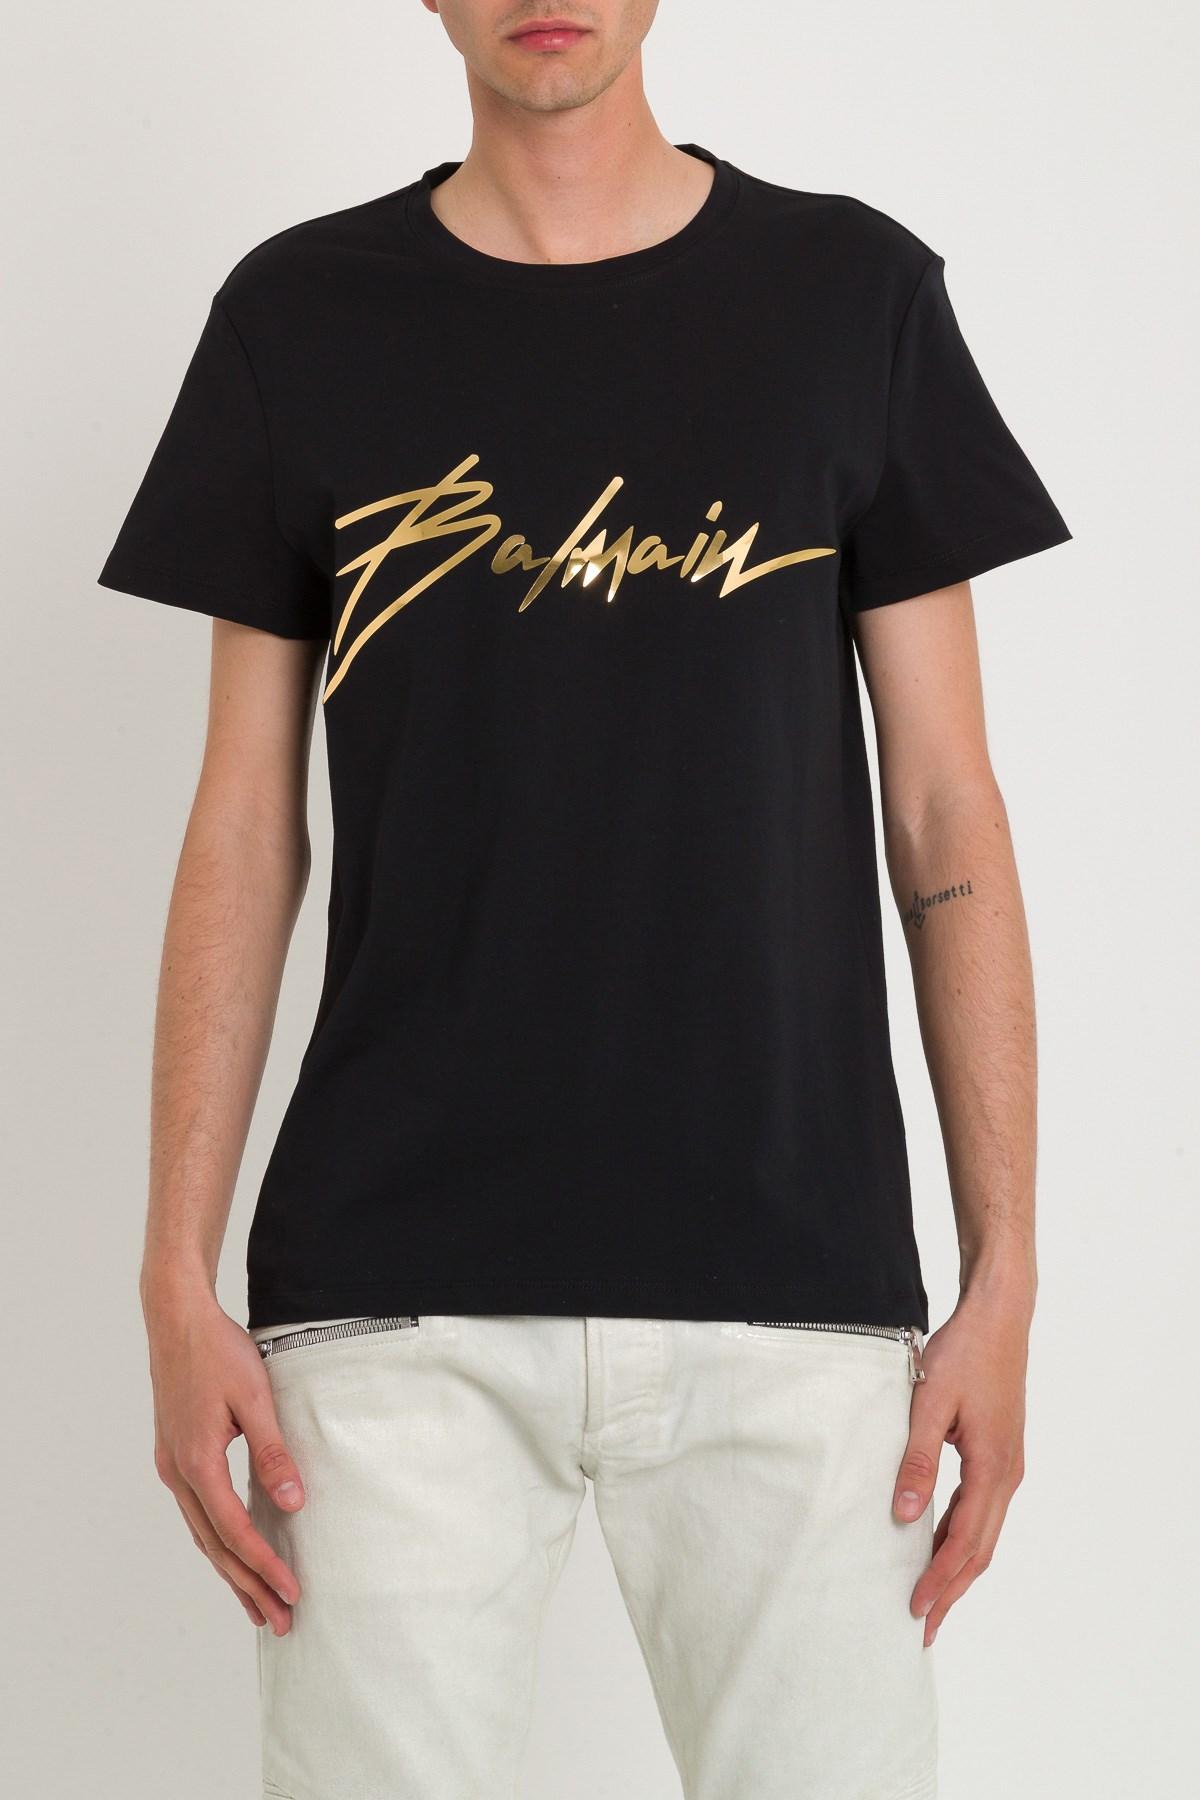 Balmain Signature Logo Cotton T-shirt in Black for Men | Lyst